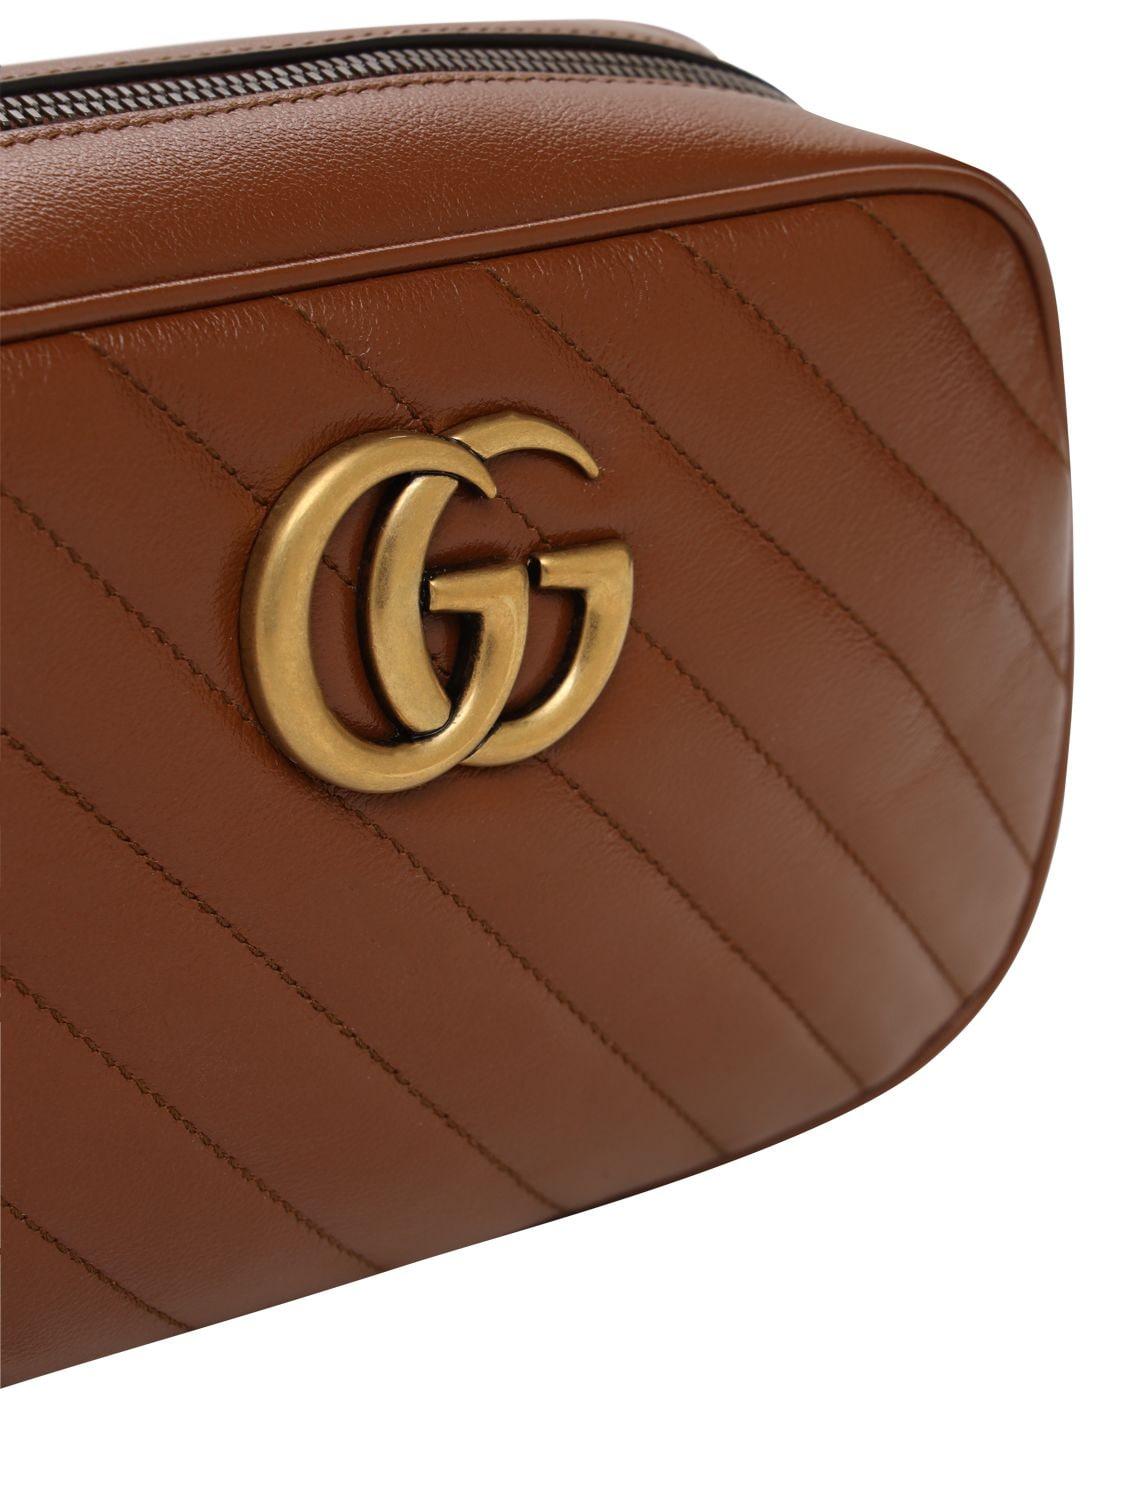 Gucci GG Marmont Small Matelassé Shoulder Bag - Black • Price »